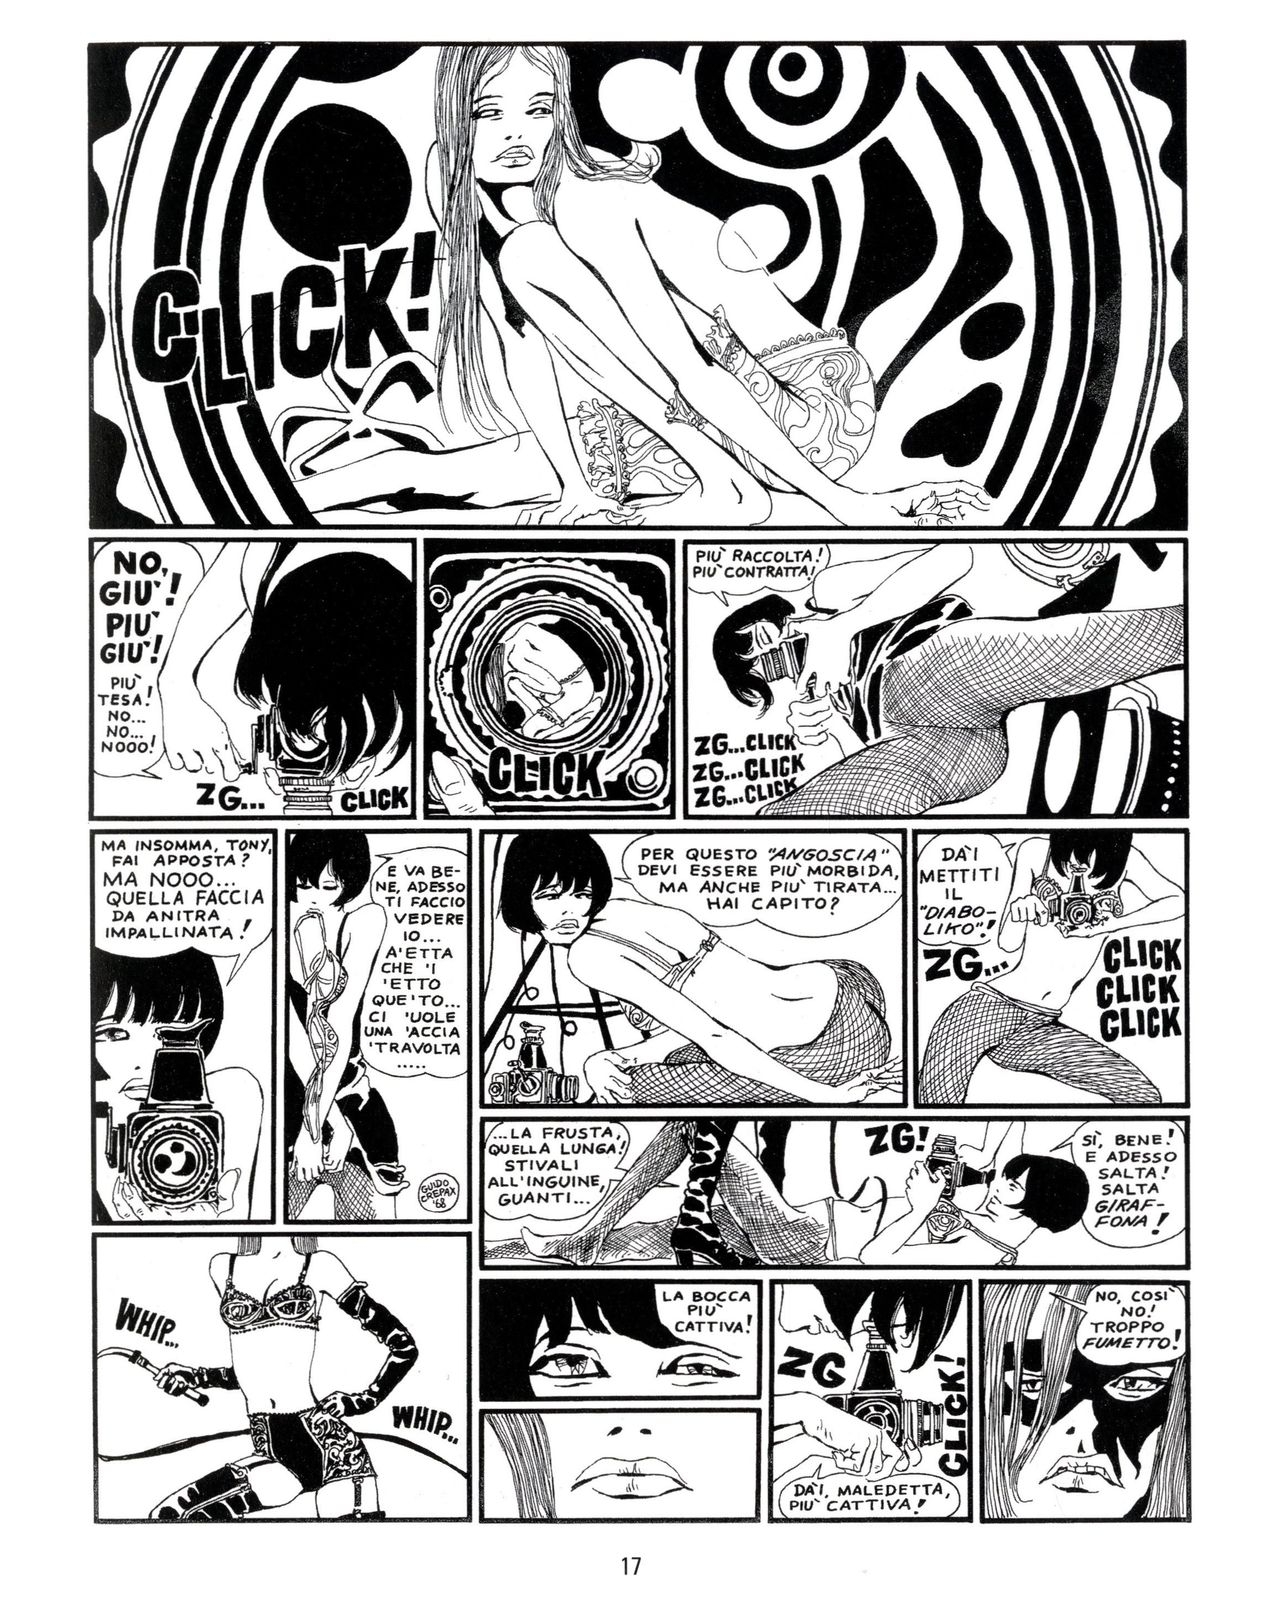 [Guido Crepax] Erotica Fumetti #25 : L'ascesa dei sotterranei : I cavalieri ciechi [Italian] 20